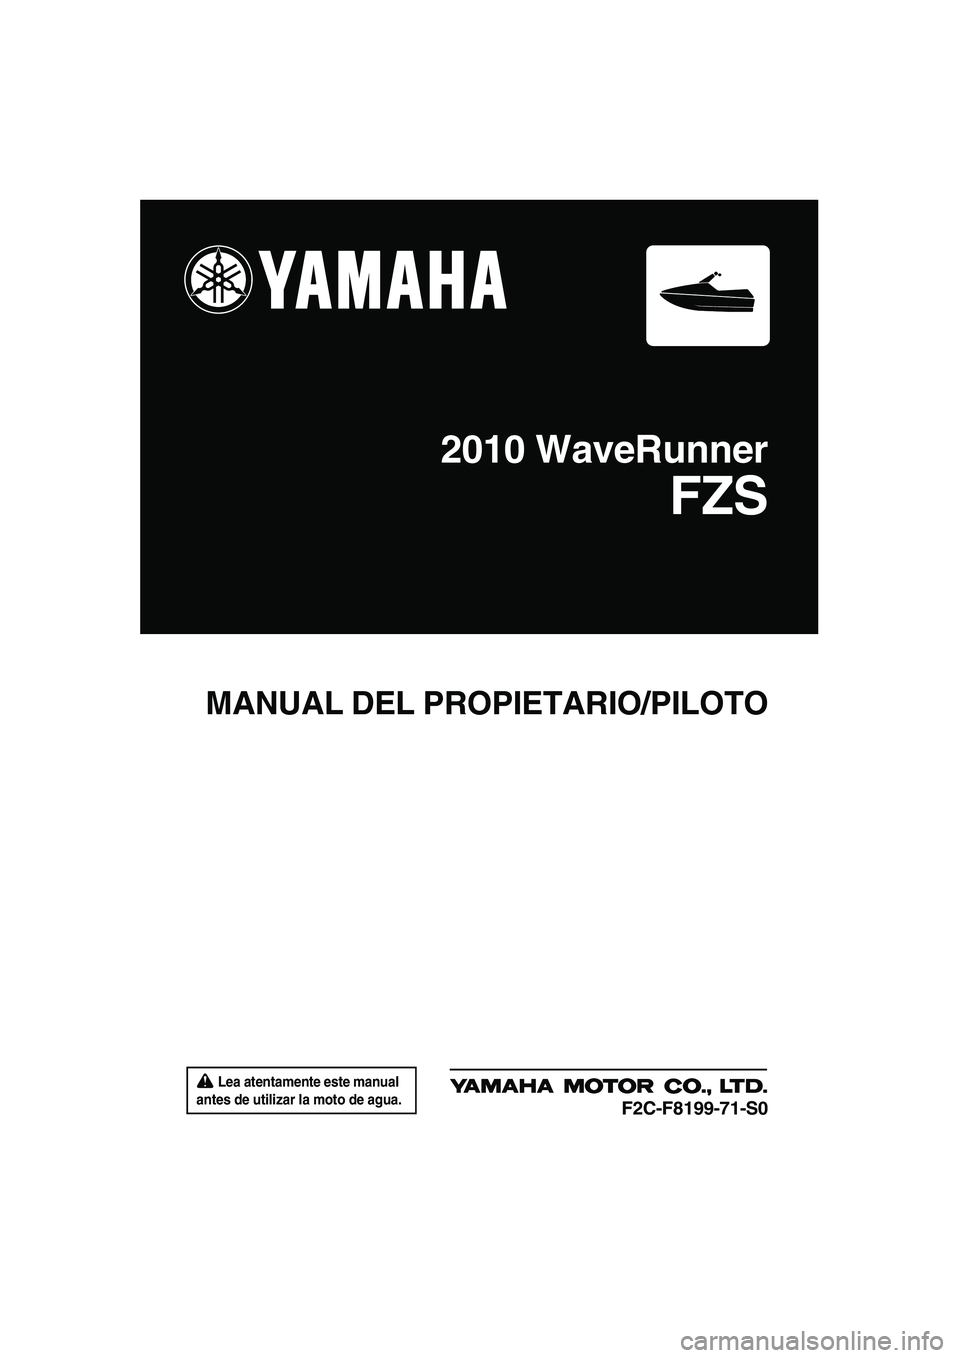 YAMAHA FZS SVHO 2010  Notices Demploi (in French)  Lea atentamente este manual 
antes de utilizar la moto de agua.
MANUAL DEL PROPIETARIO/PILOTO
2010 WaveRunner
FZS
F2C-F8199-71-S0
UF2C71S0.book  Page 1  Tuesday, July 14, 2009  11:41 AM 